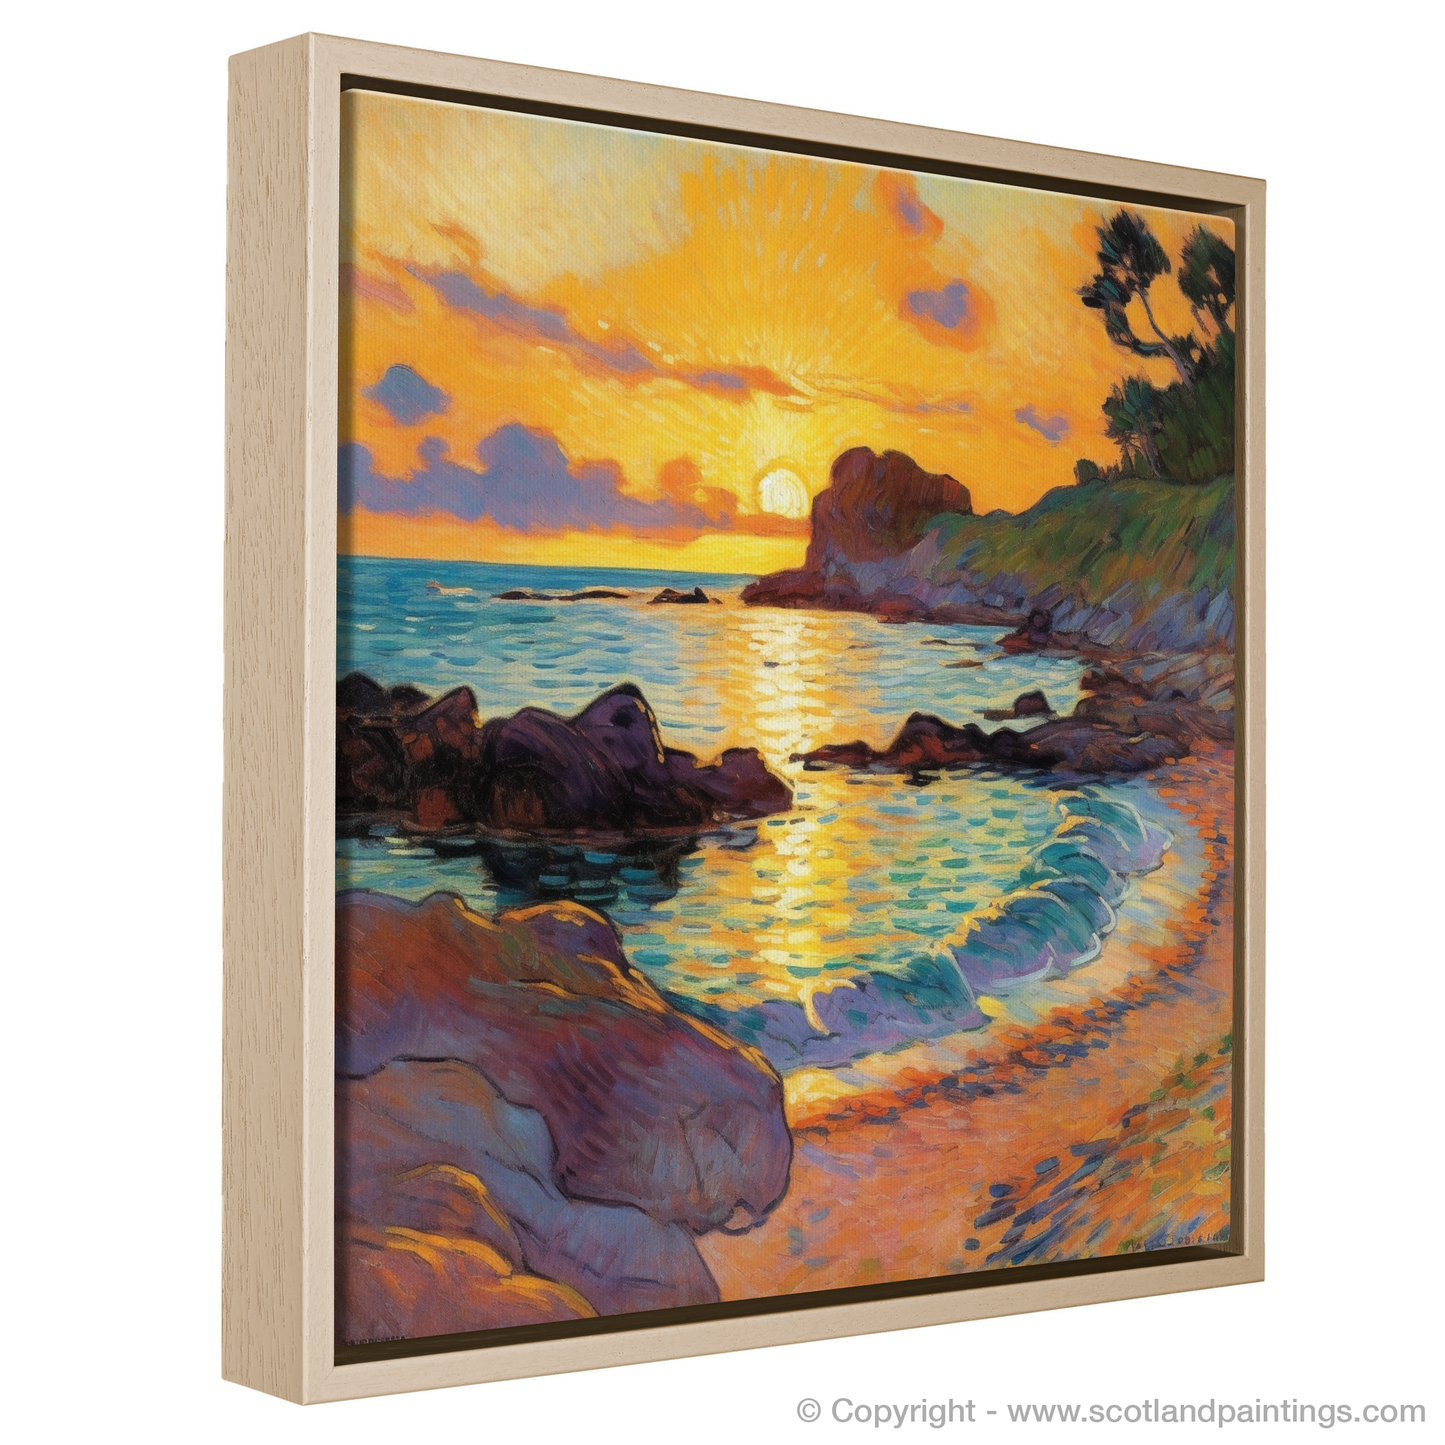 Golden Hour at Catterline Bay: An Impressionist Escape